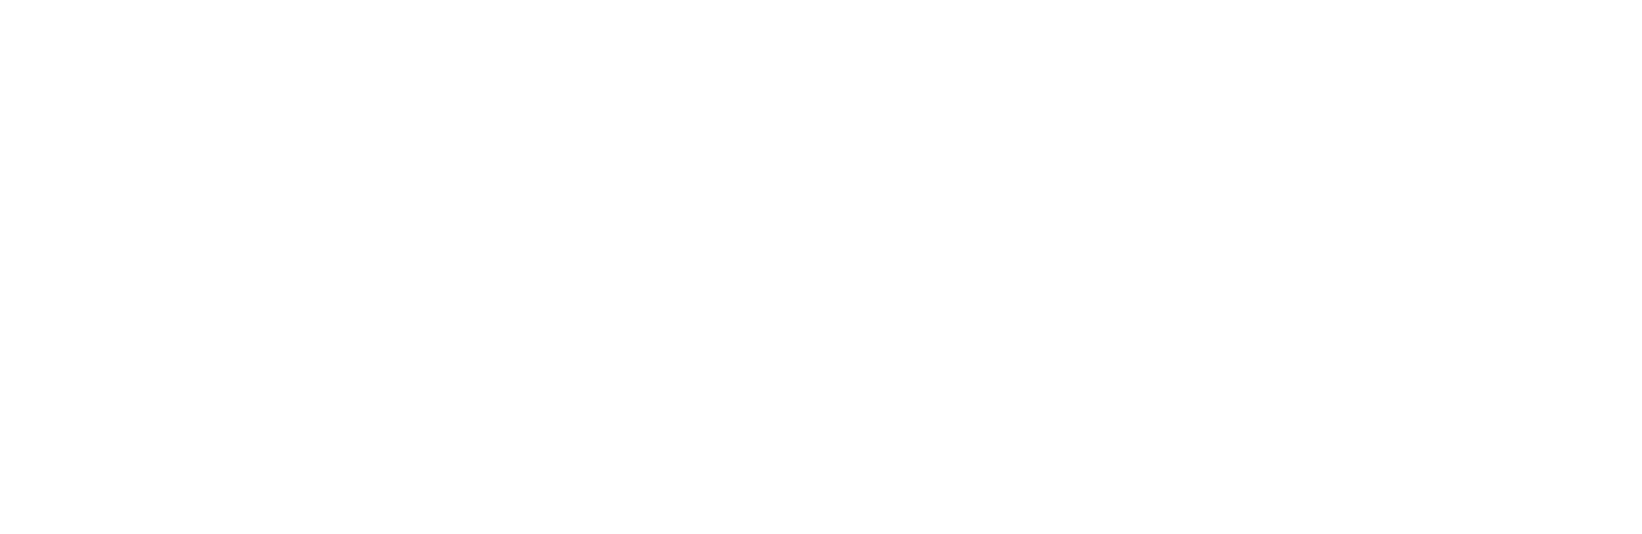 HardwareBee